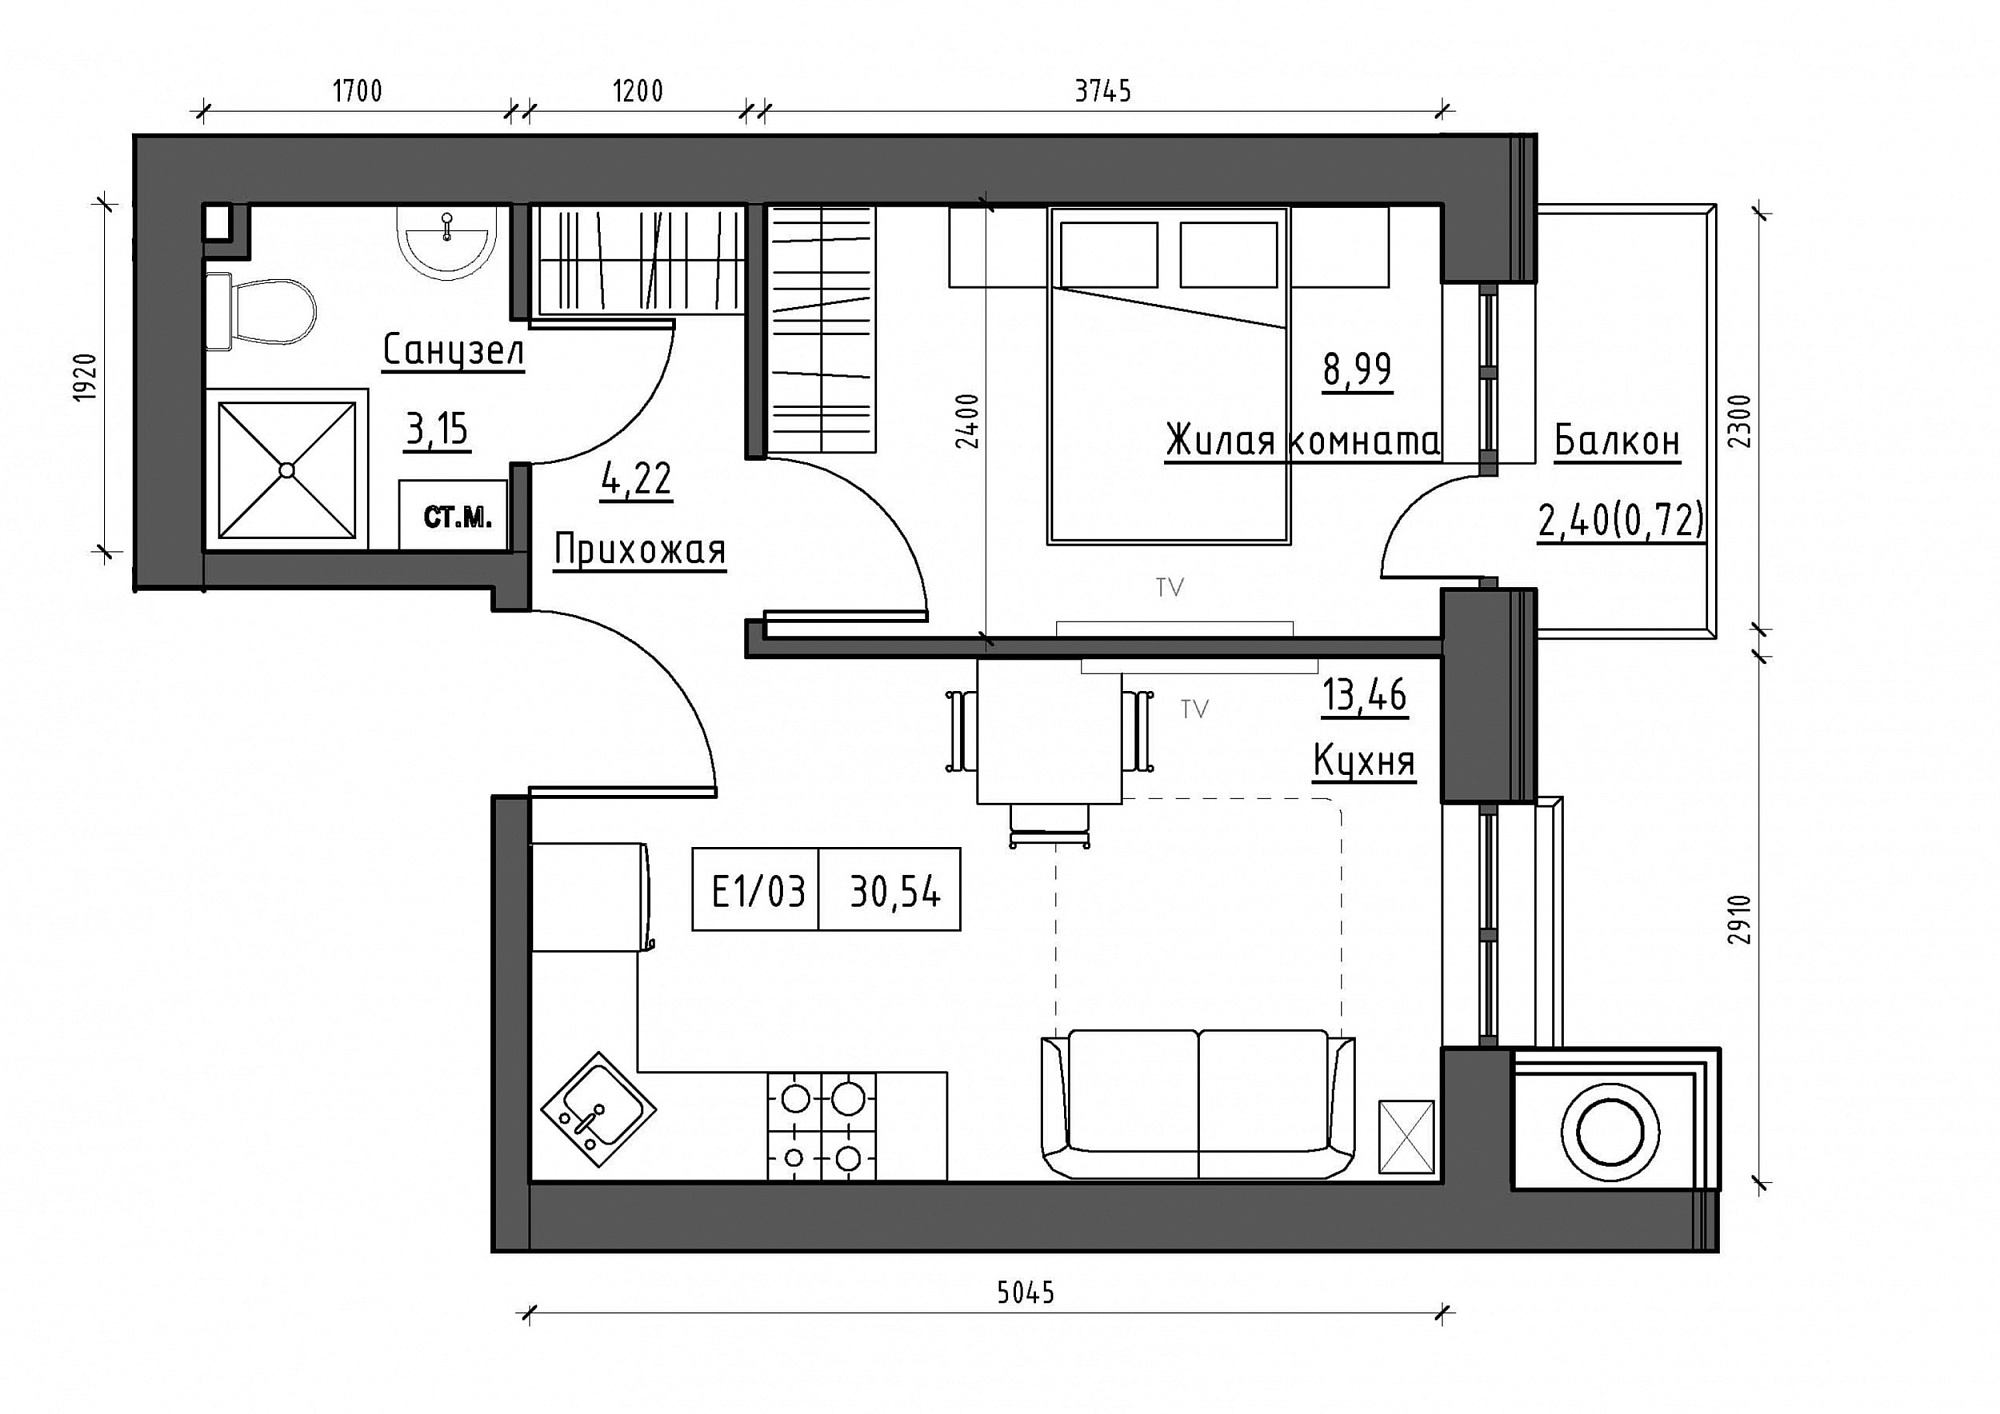 Planning 1-rm flats area 30.54m2, KS-012-05/0016.